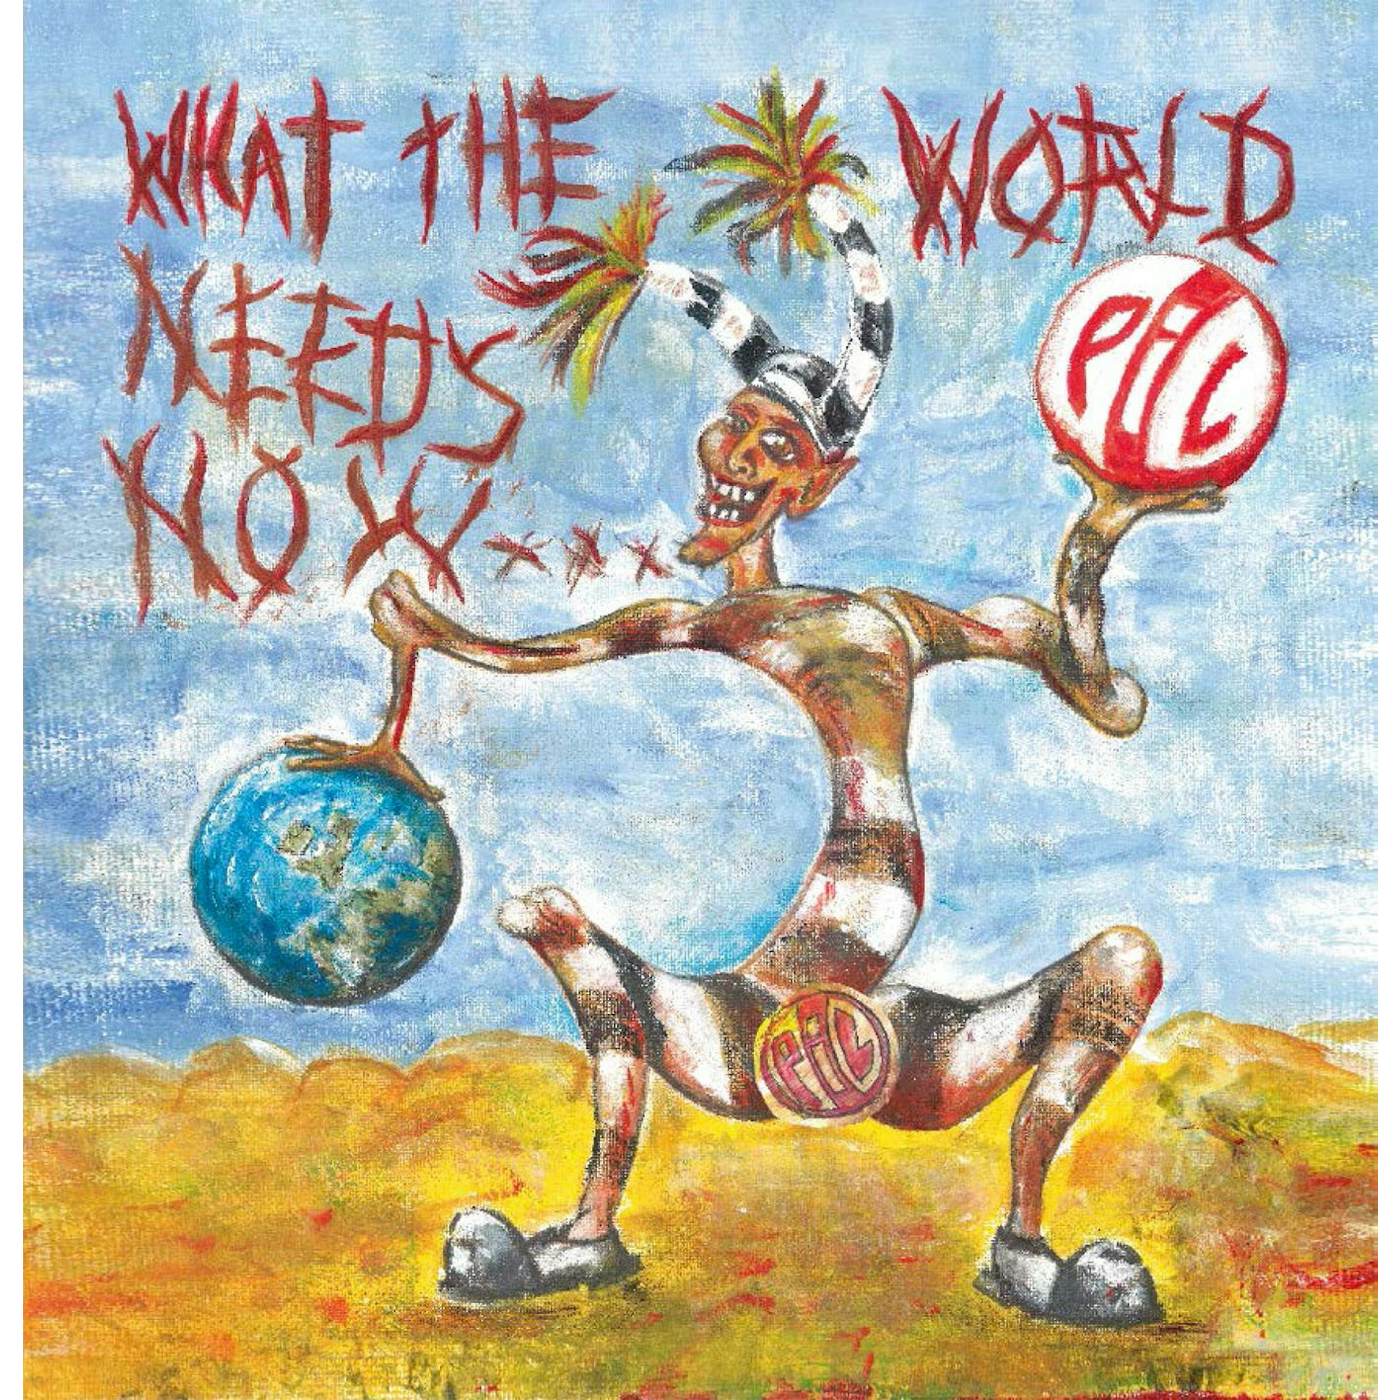 Public Image Ltd. (PiL) 'What The World Needs Now...' Vinyl Record